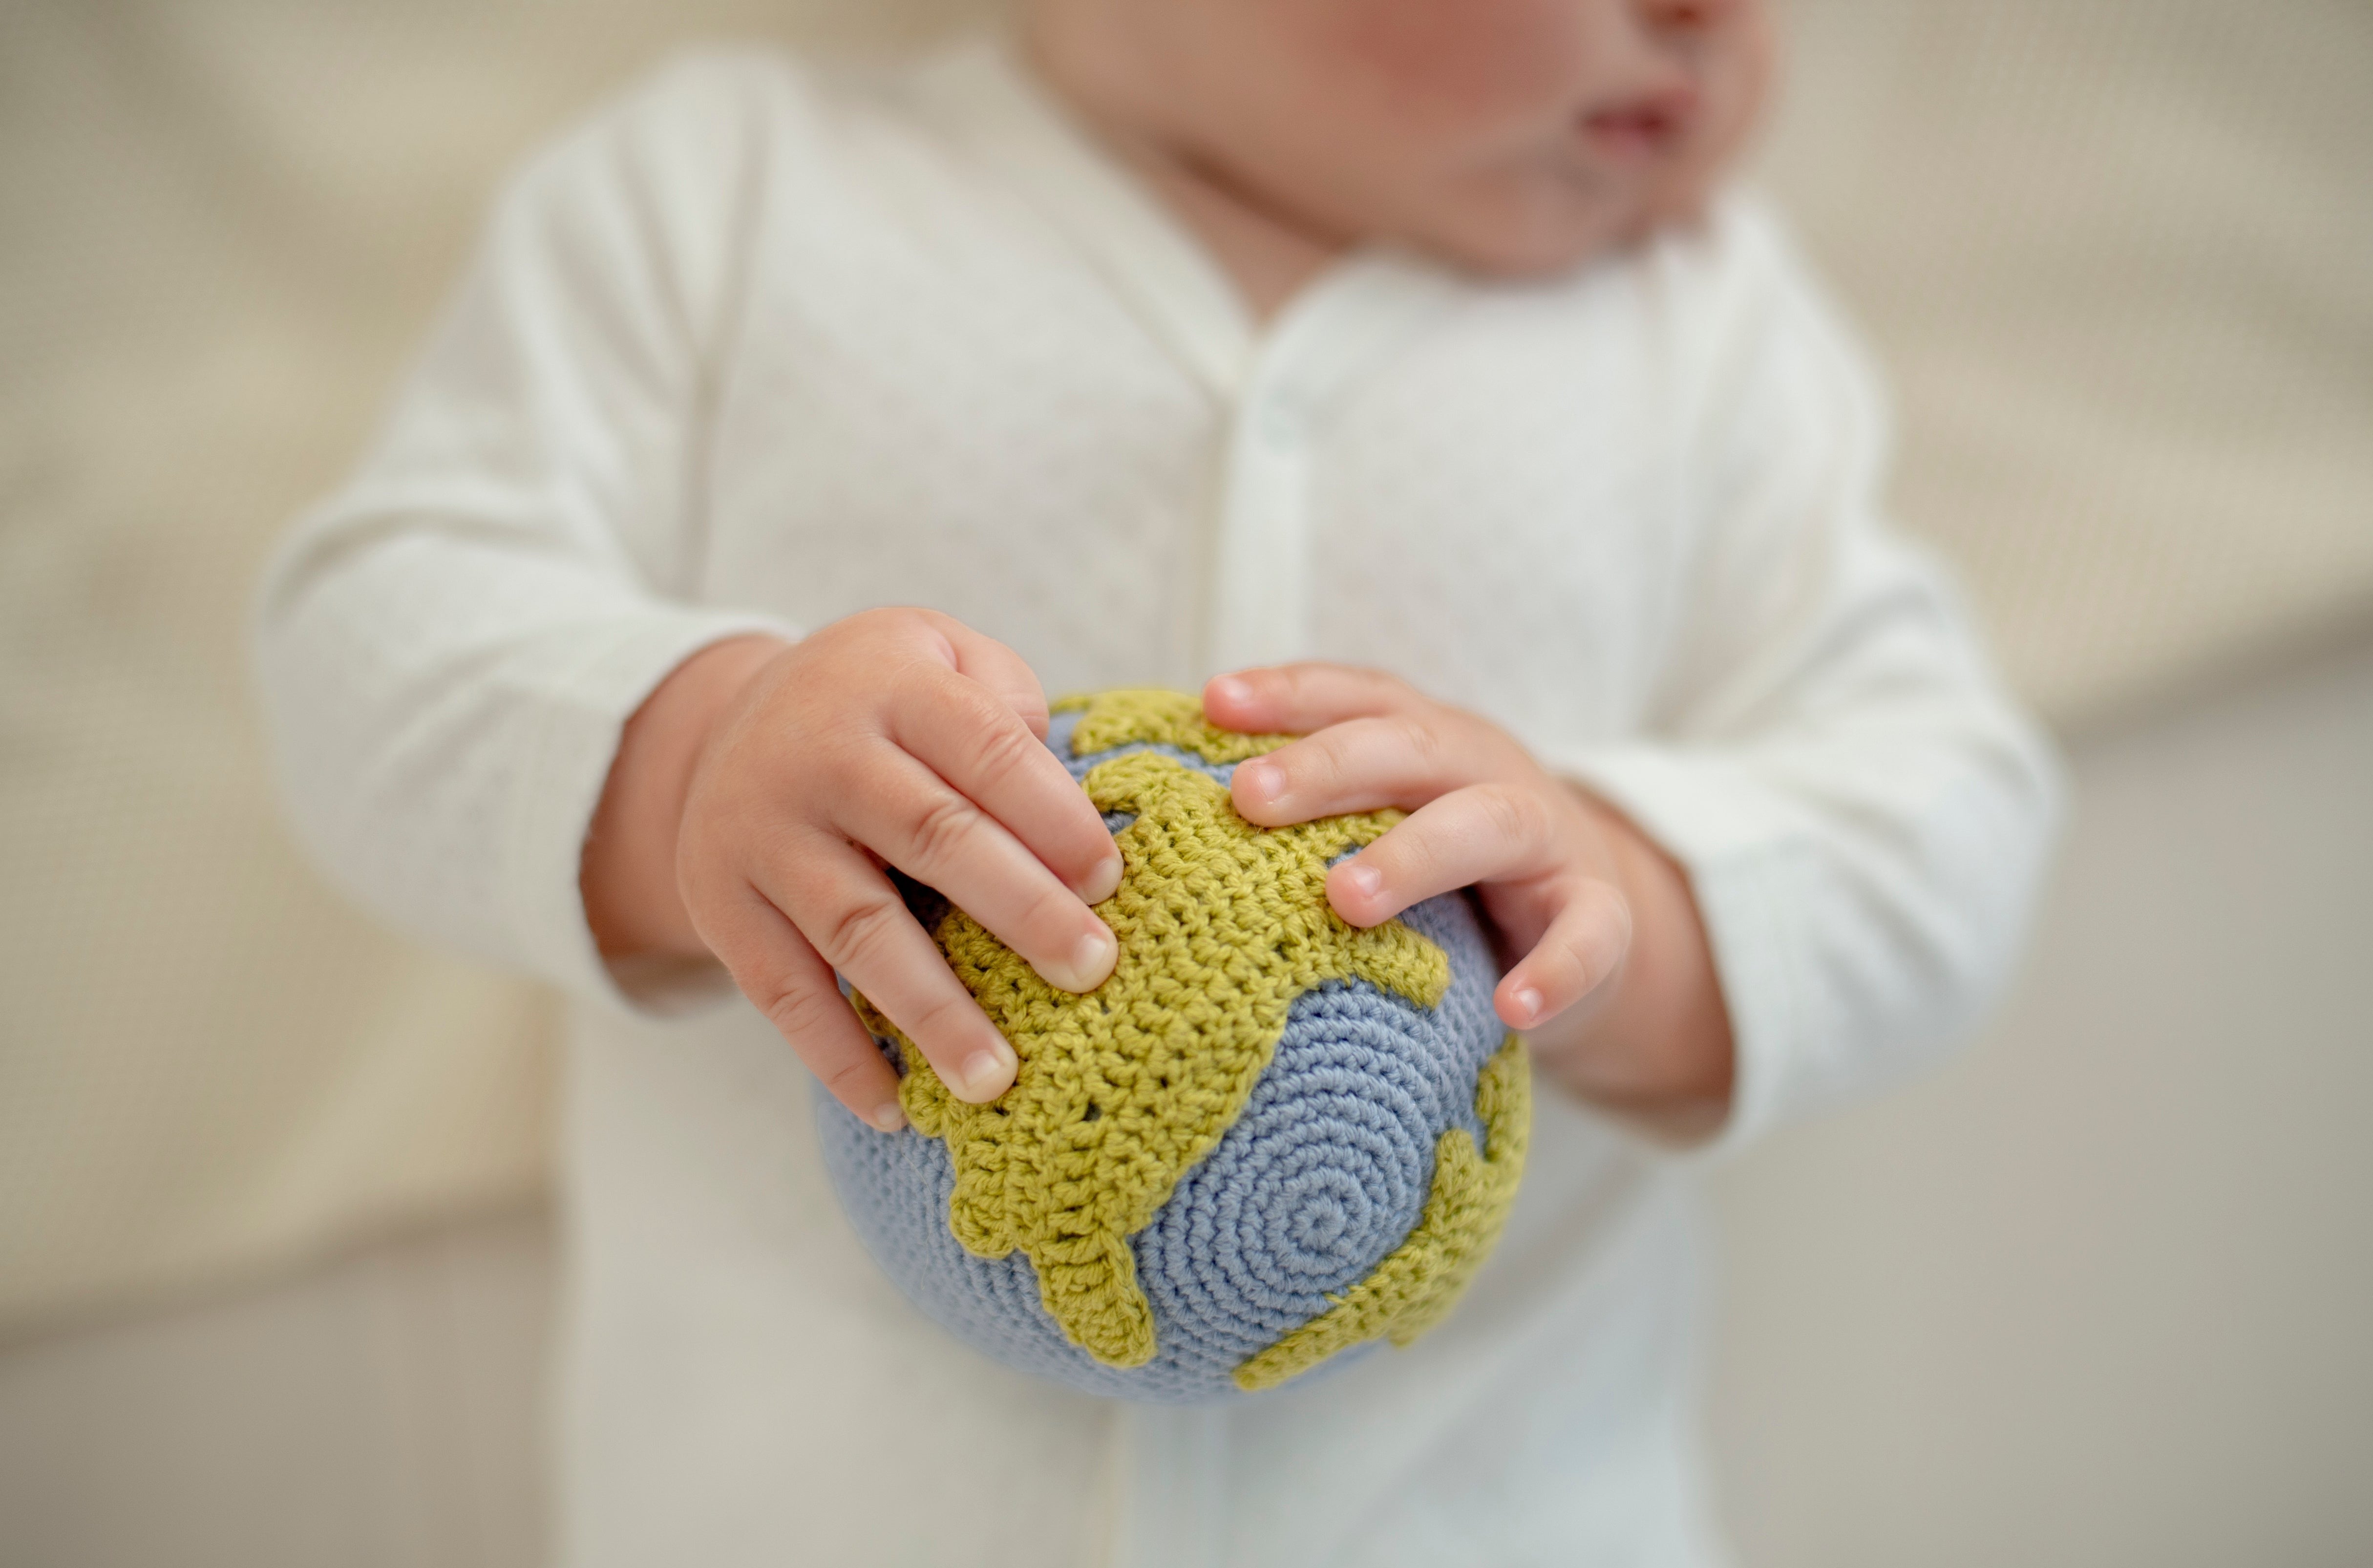 Small Crochet Globe Rattle